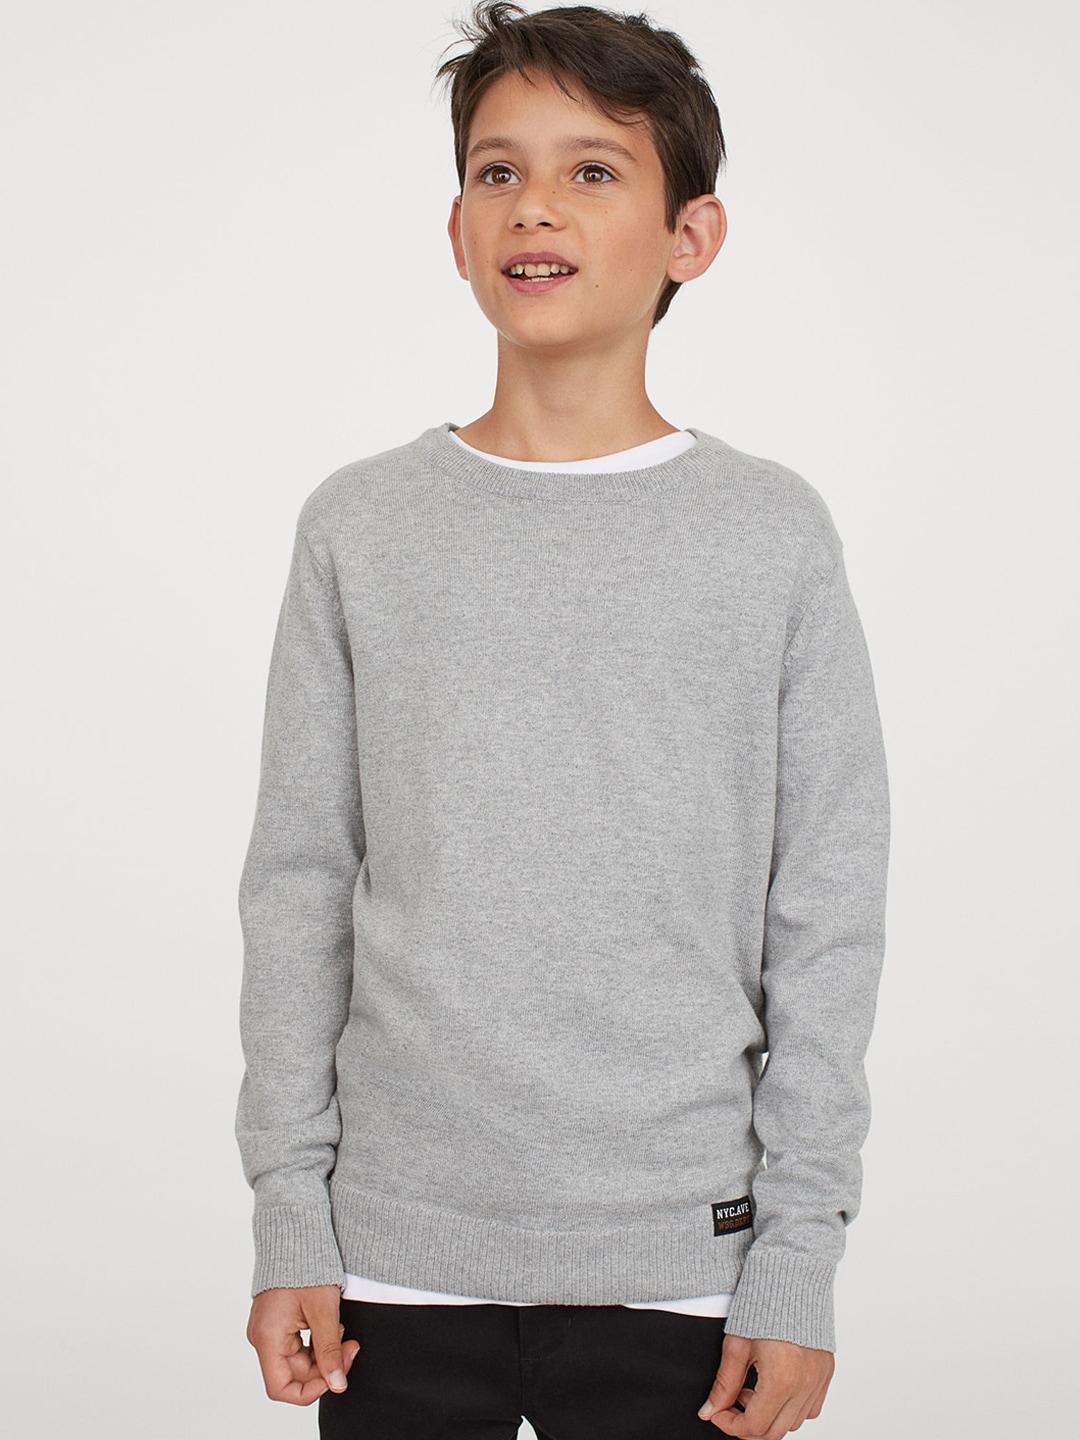 h&m boys grey fine-knit cotton jumper